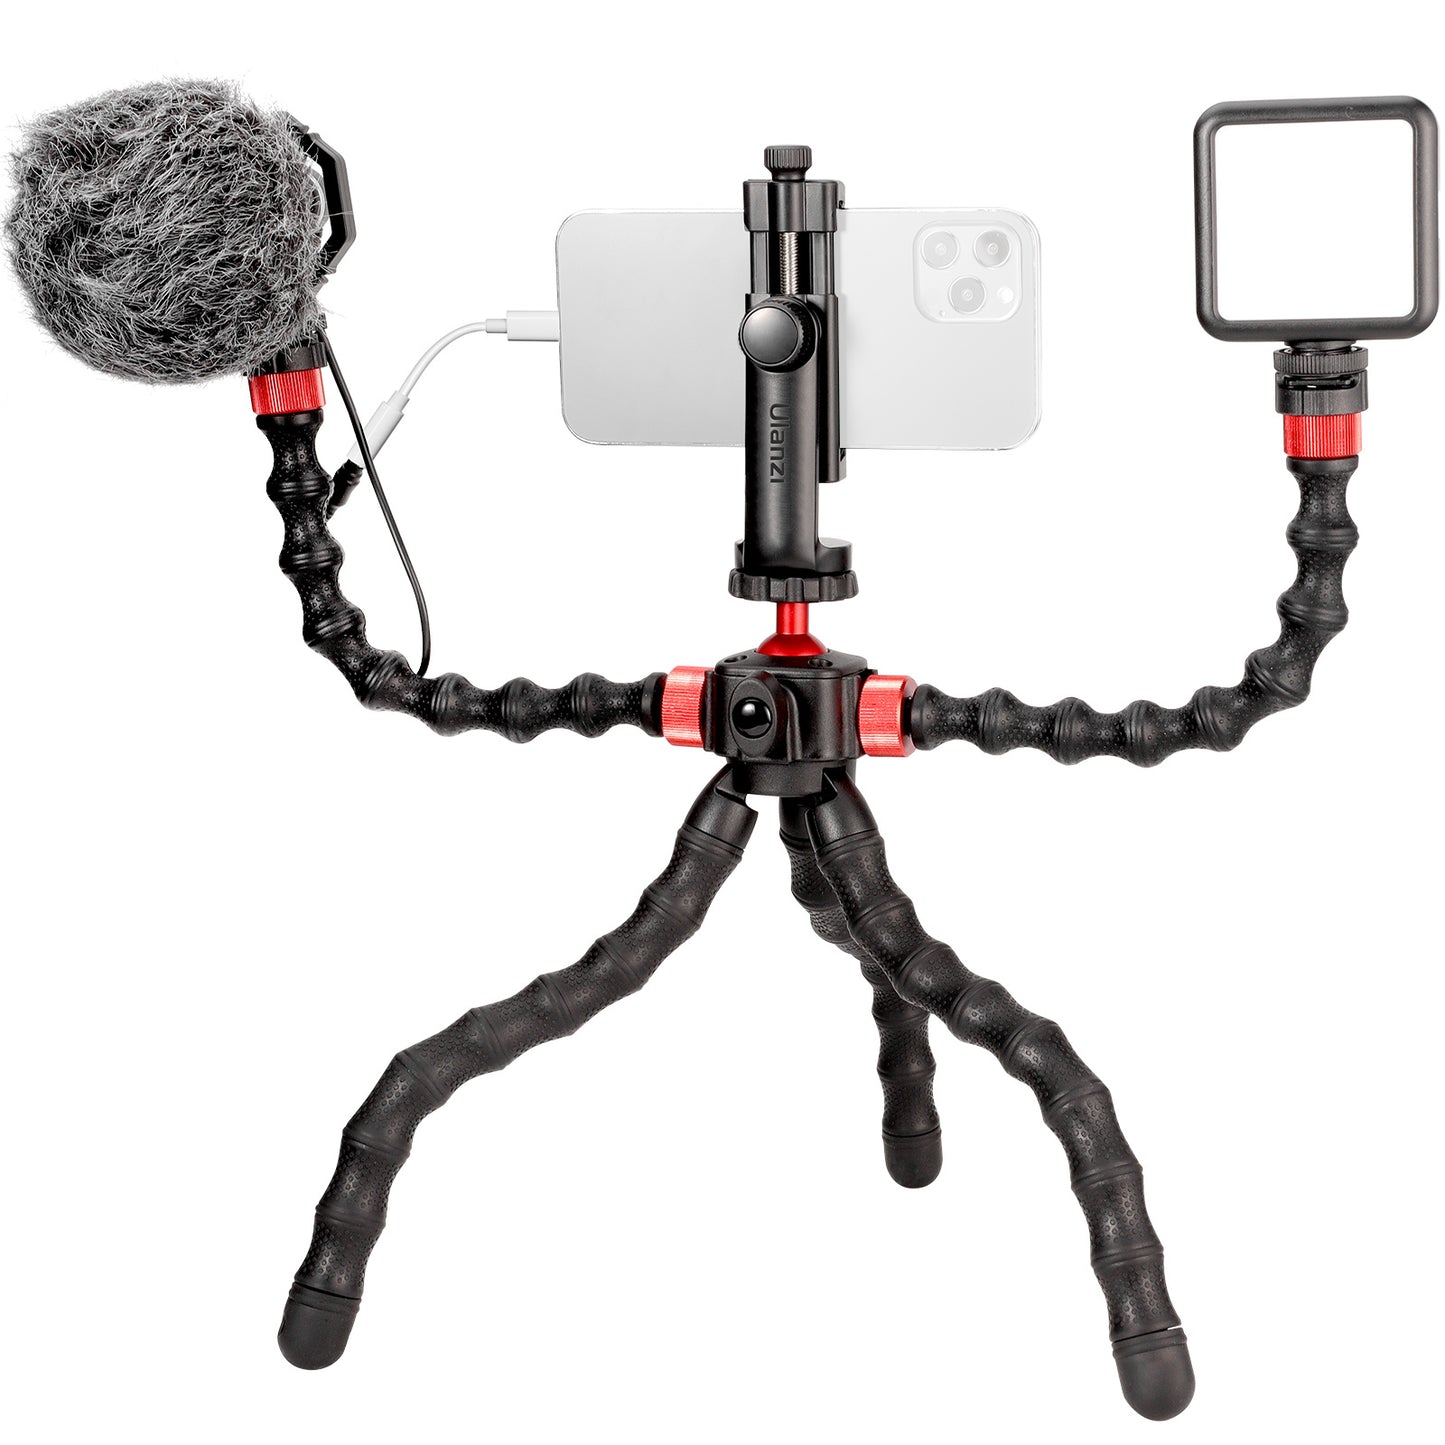 Ulanzi 2810 Smartphone Vlog Kit Set (Gorilla Tripod, Microphone, Fill Light, Phone / Shock Mount, Windscreens) for Filmmaking Livestream Video Content